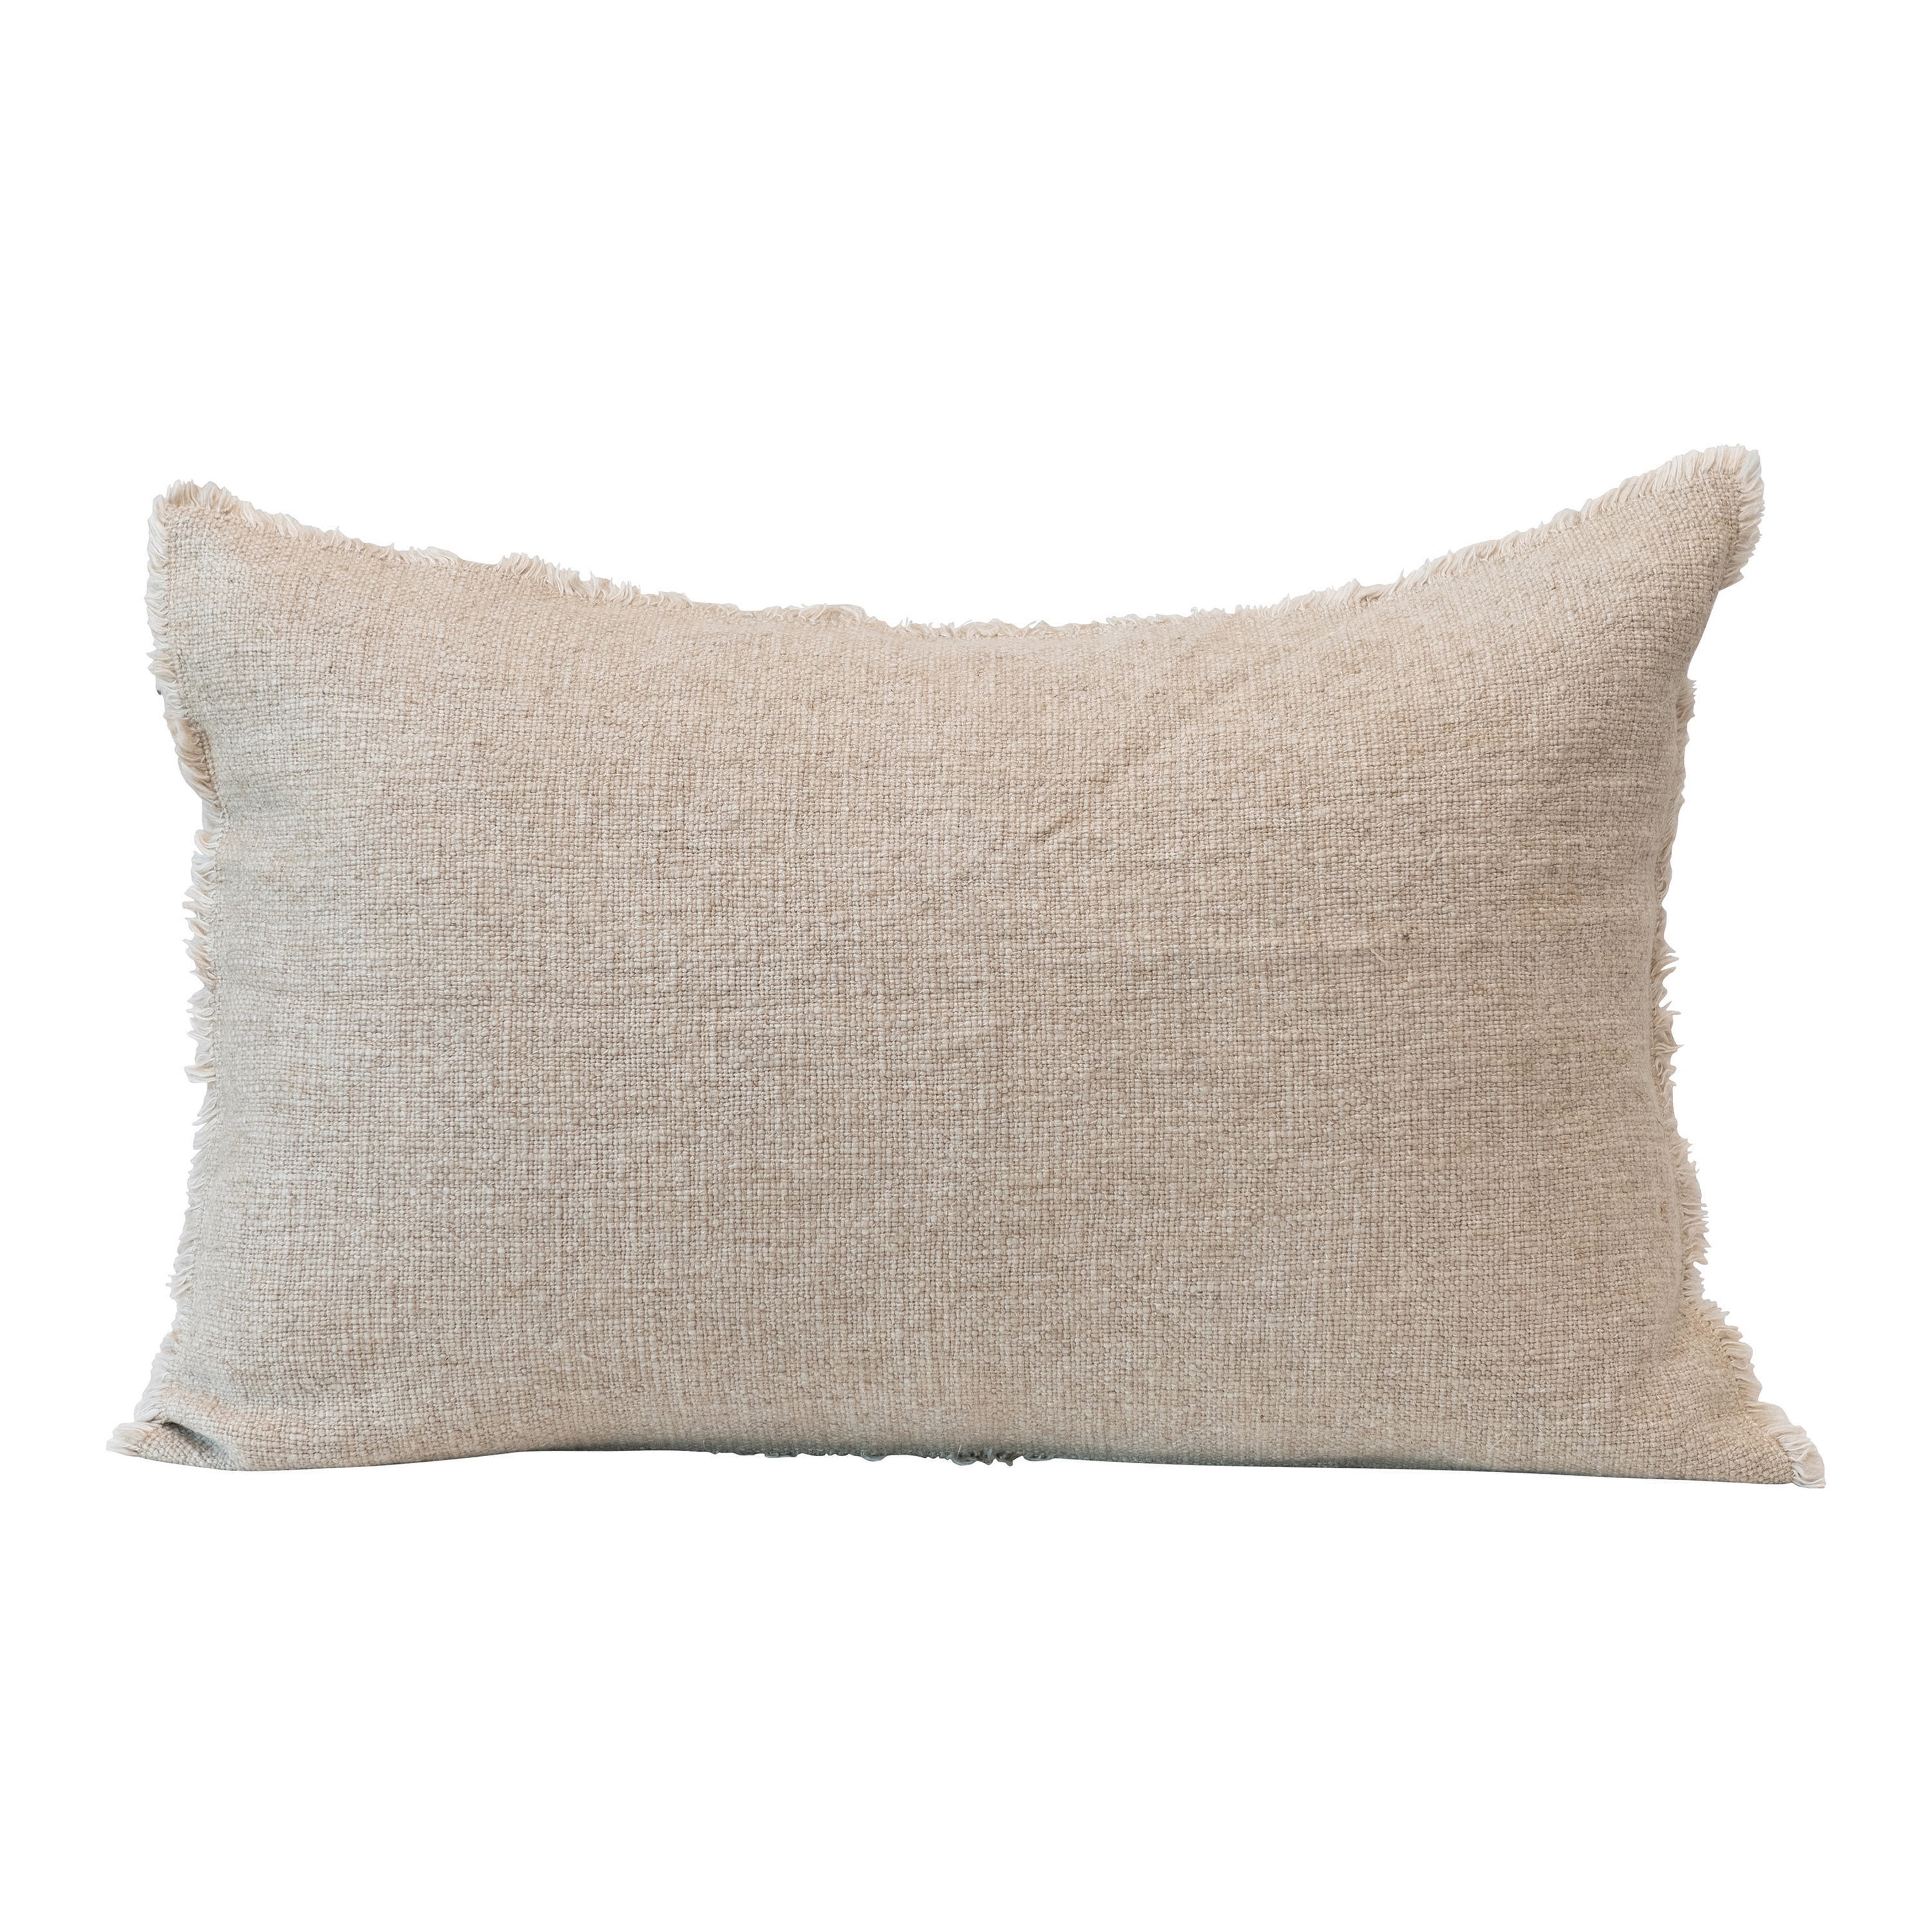 Shop Lacura Removable Pommel Cushion by Sammons Preston